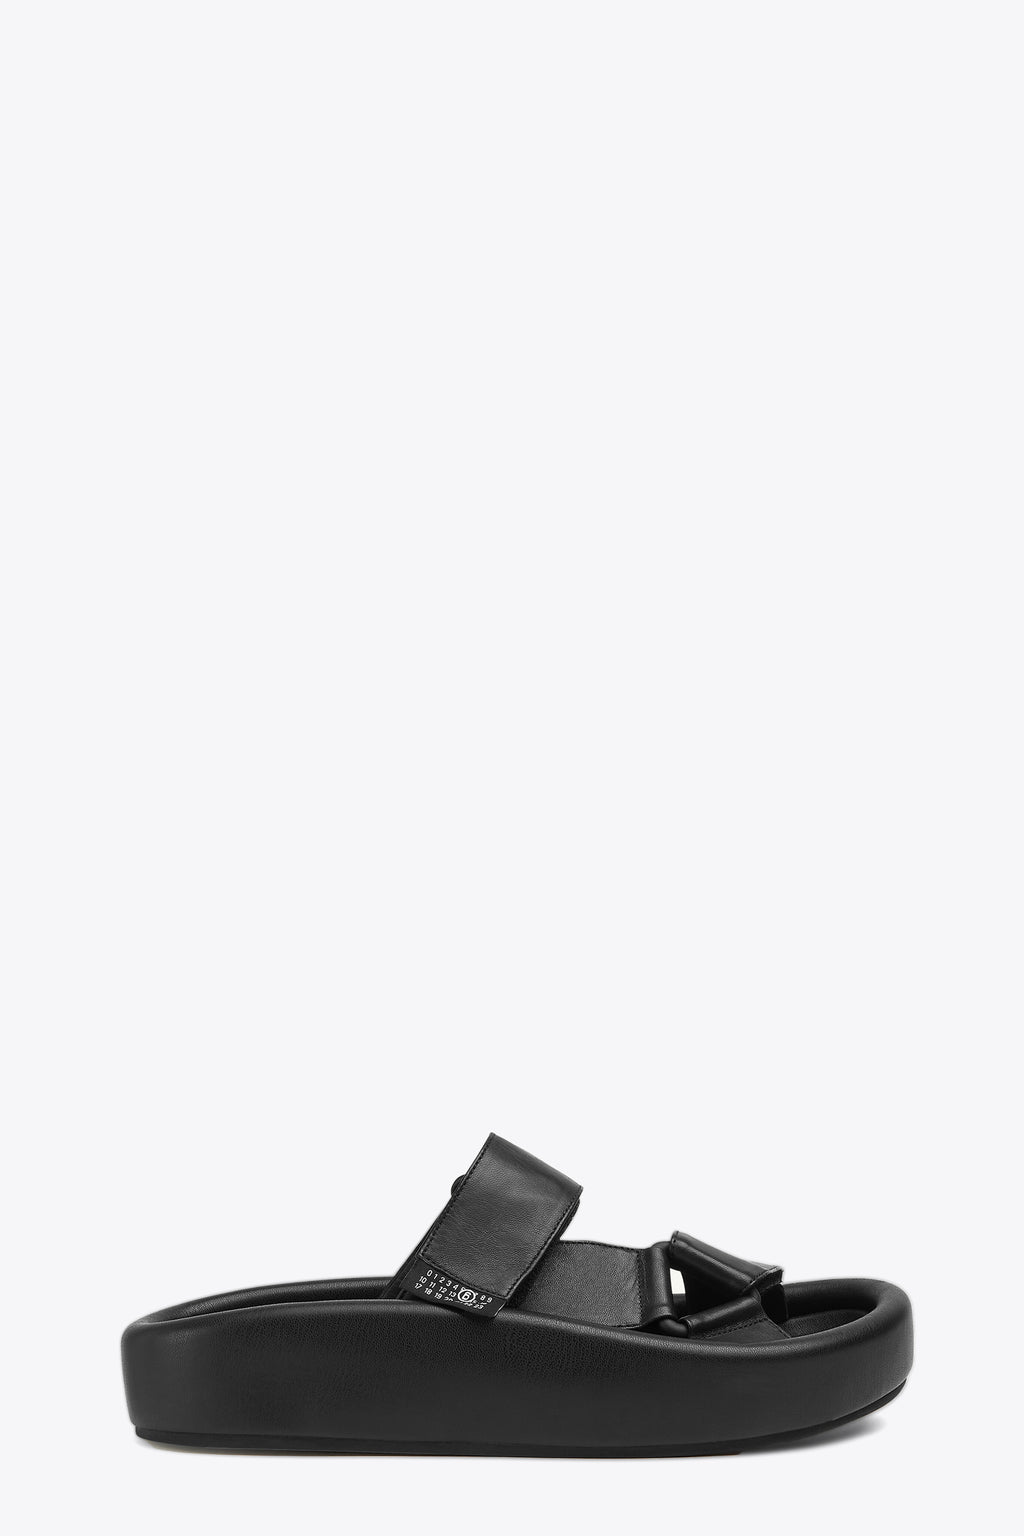 alt-image__Black-leather-webbing-sandal-with-chunky-sole